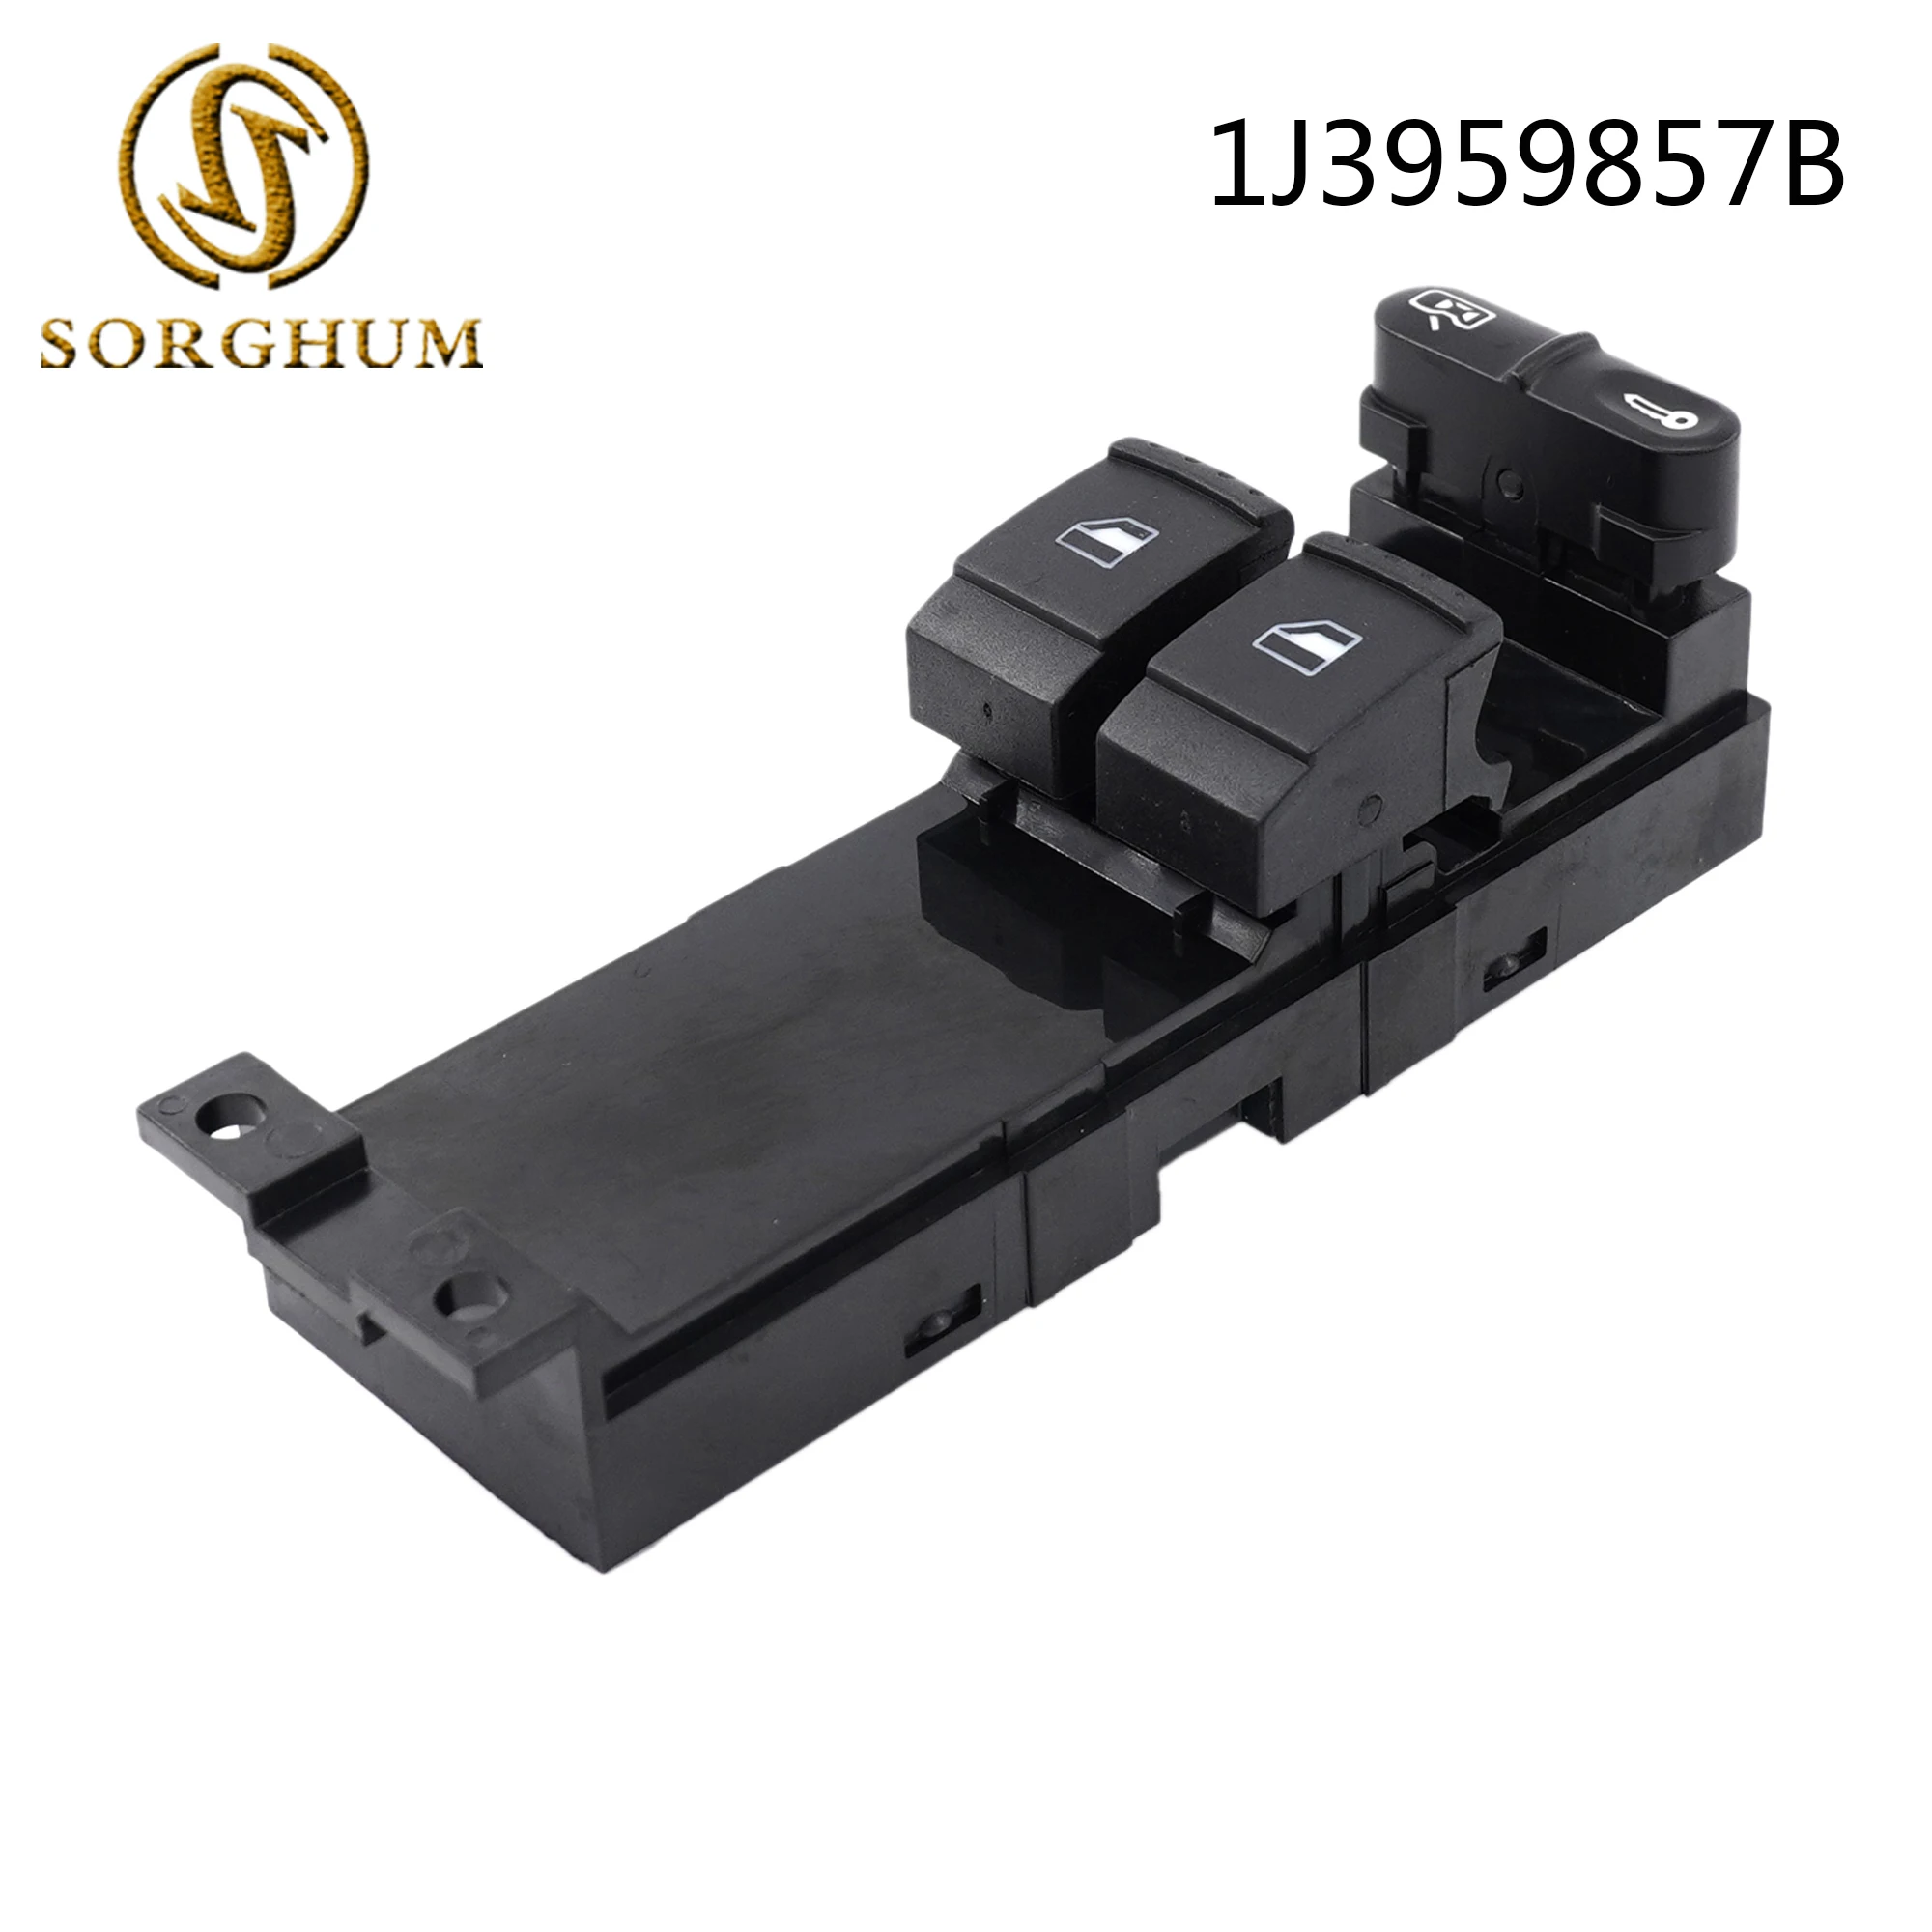 

Sorghum 1J3 959 857 1J3959857B Electric Master Panel Power Window Switch Button For Volkswagen Bora Golf 4 Passat 3B/3BG Seat